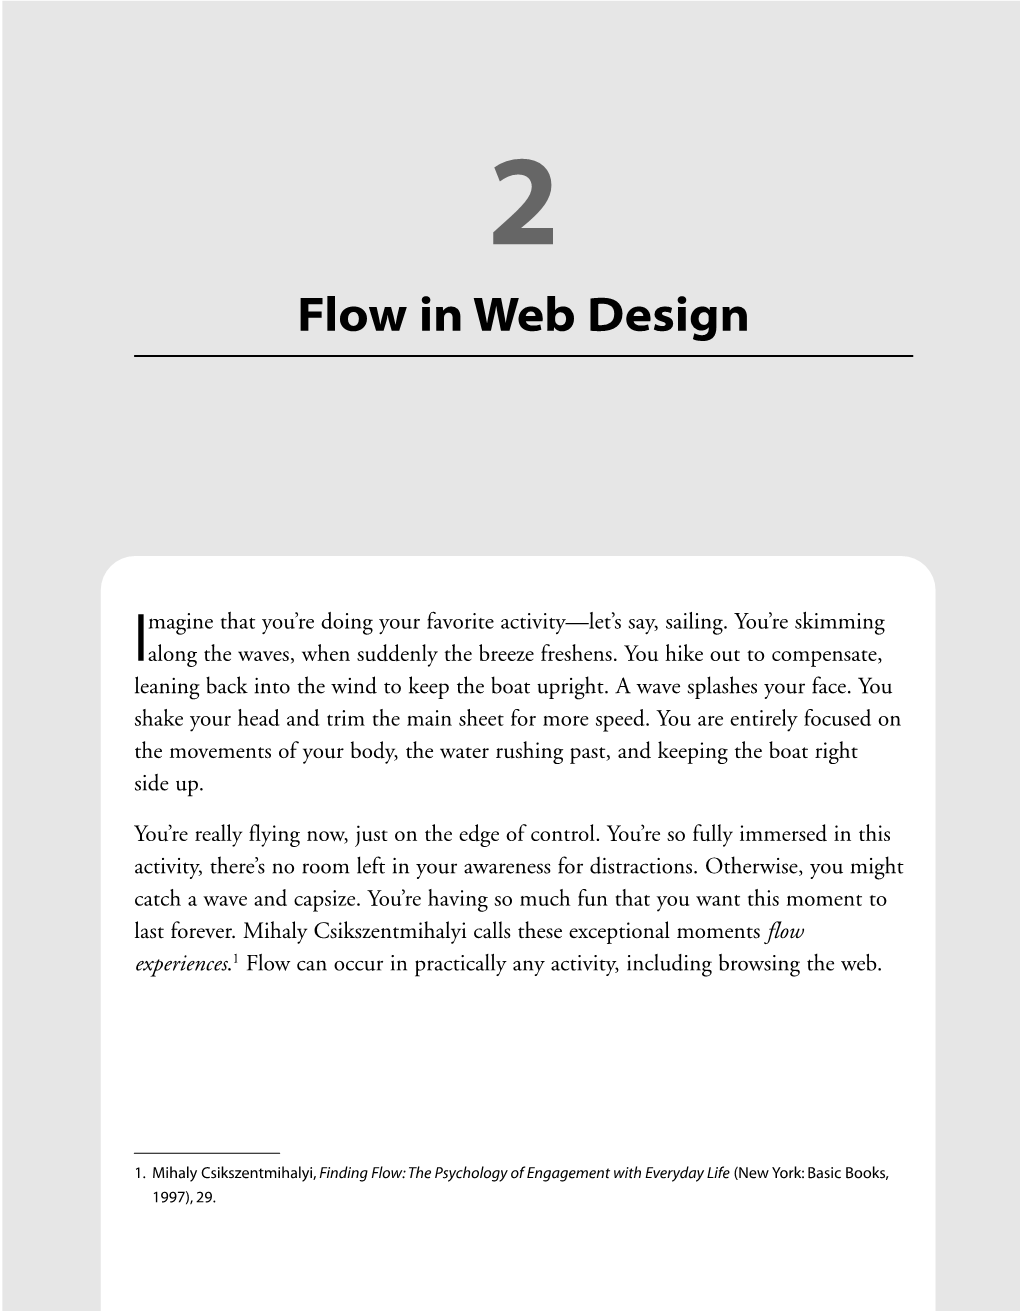 Flow in Web Design